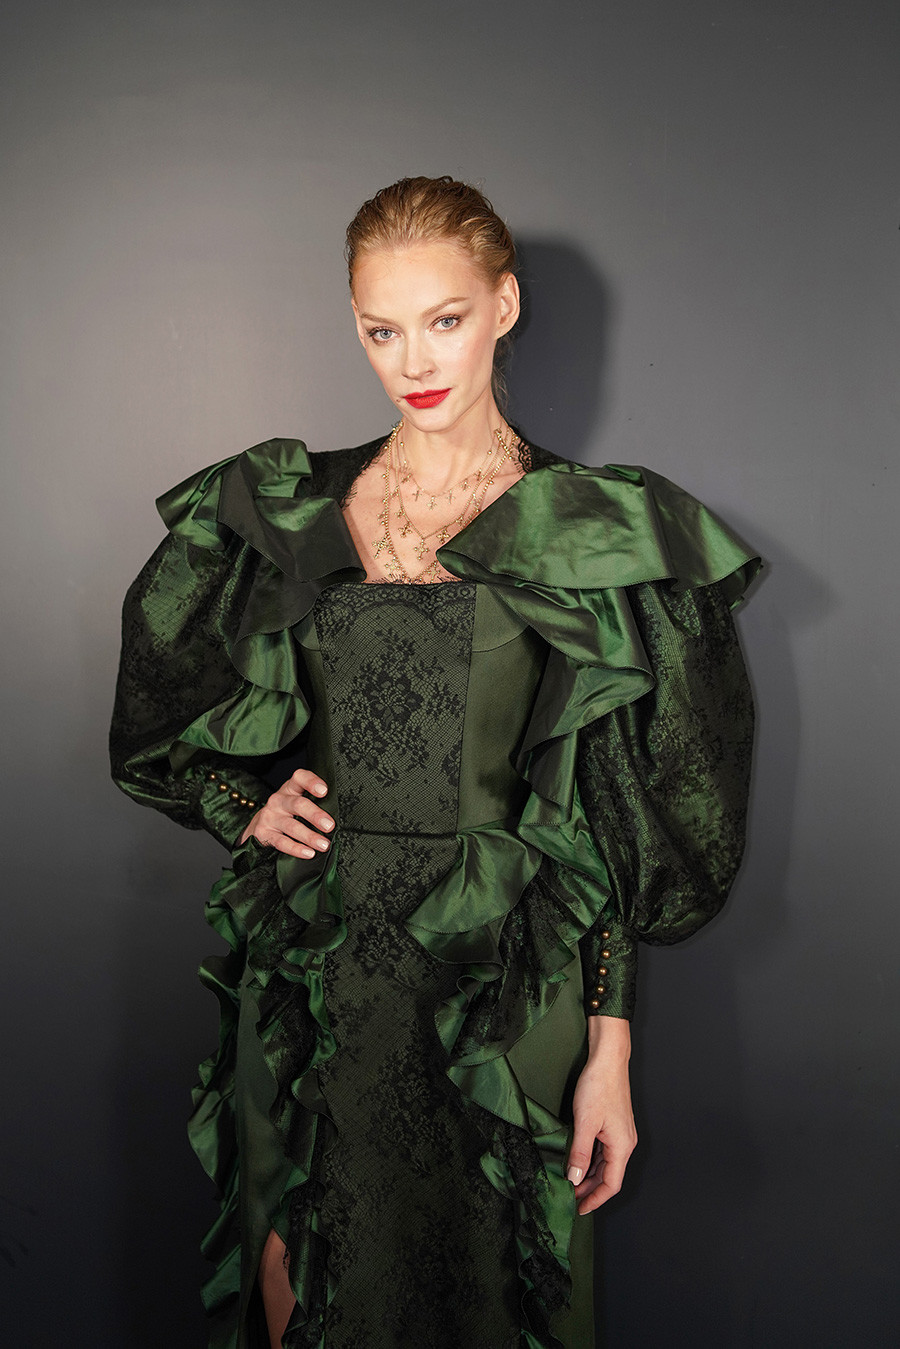 Svetlana Khodchenkova attends the Ulyana Sergeenko Spring Summer 2019 show as part of Paris Fashion Week at Theatre Marigny on January 21, 2019 in Paris, France